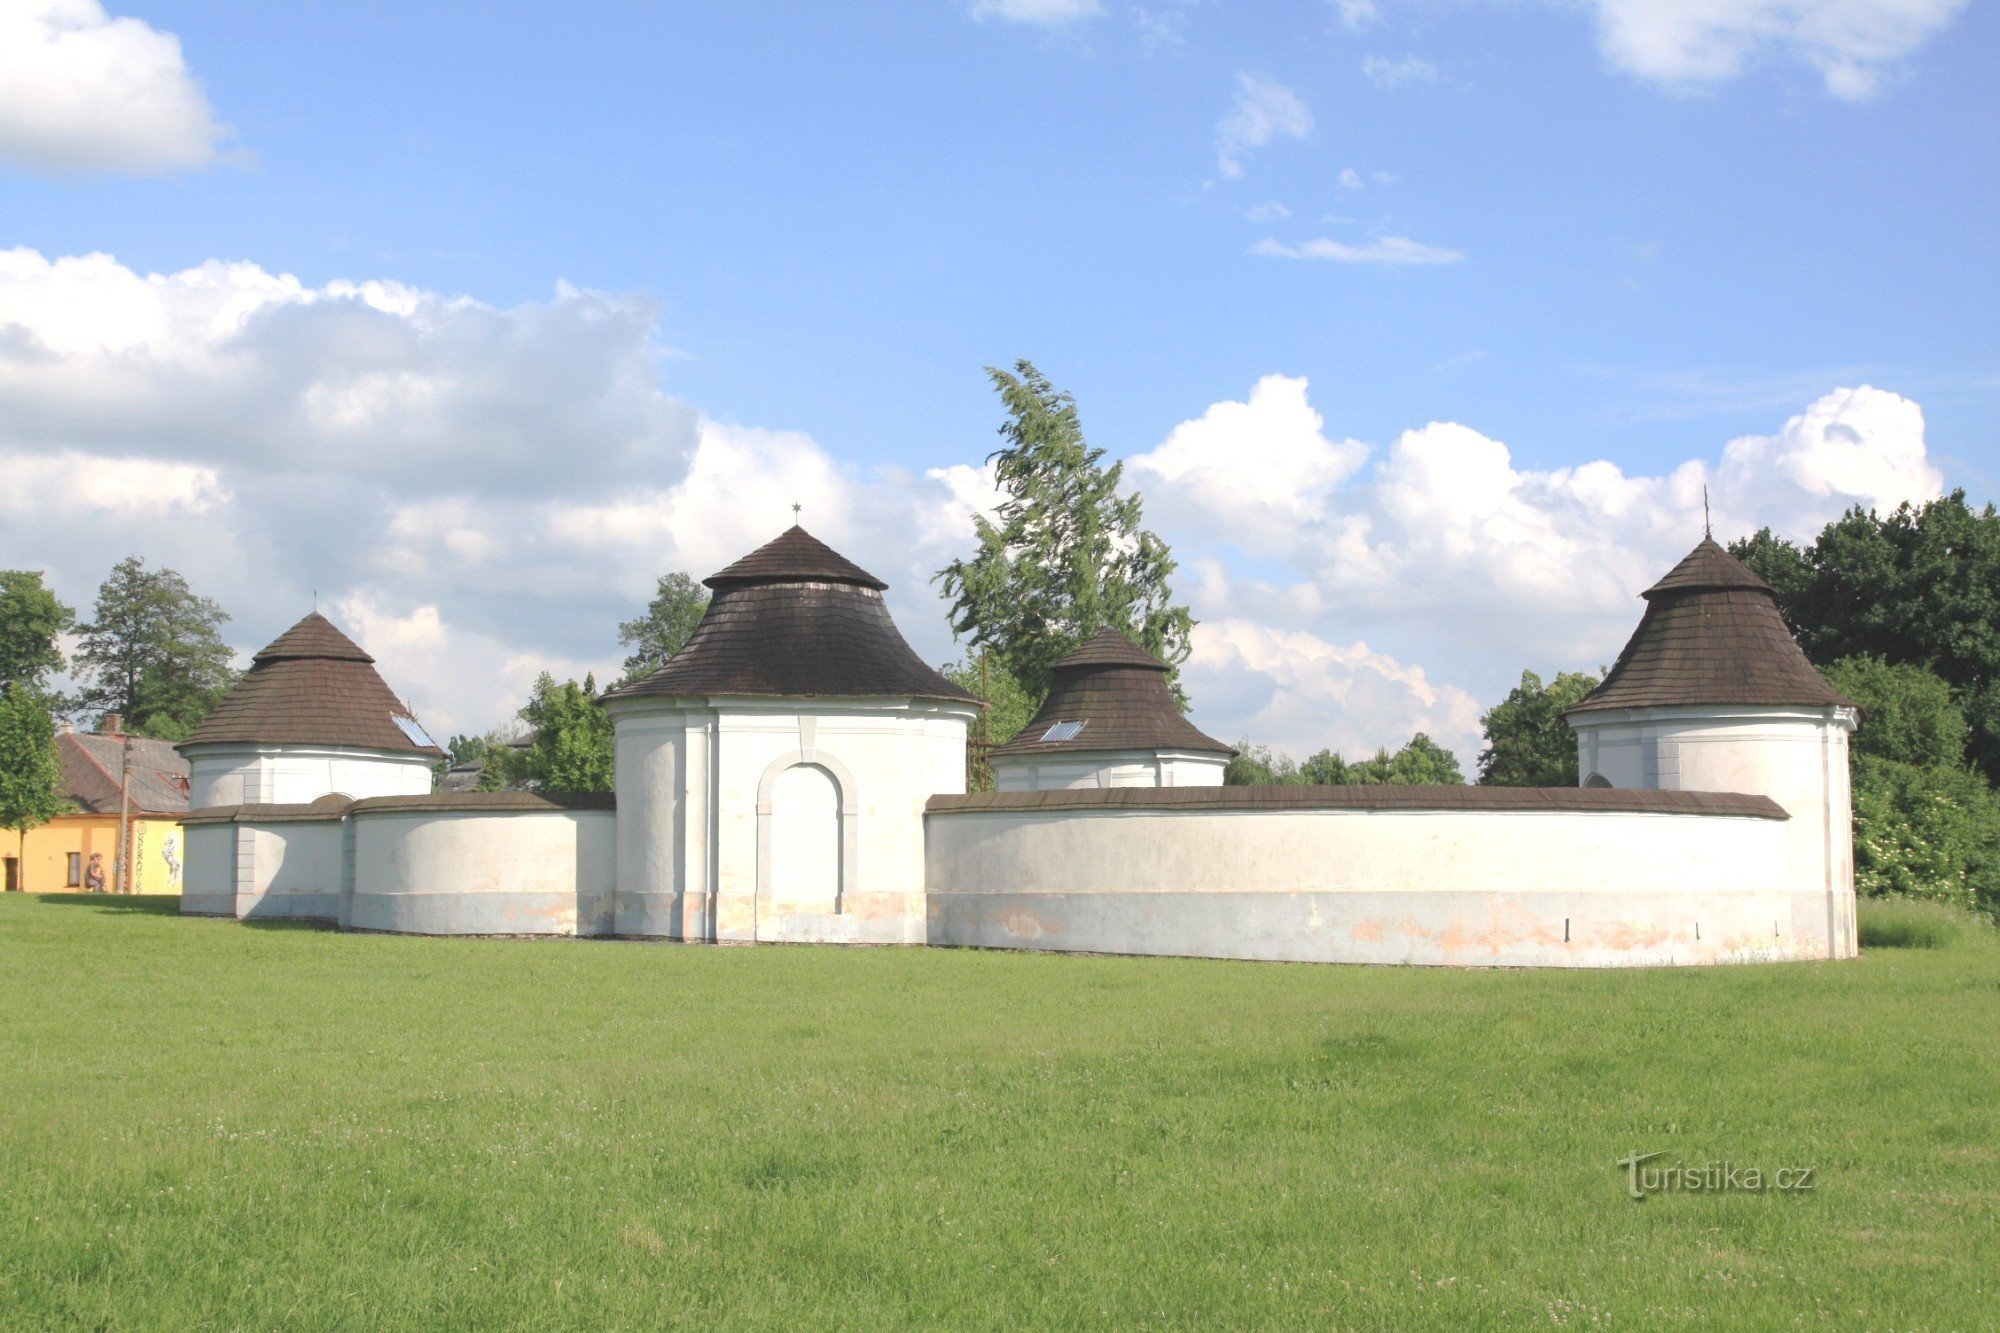 Žďár nad Sázavou - fost cimitir Ciuma